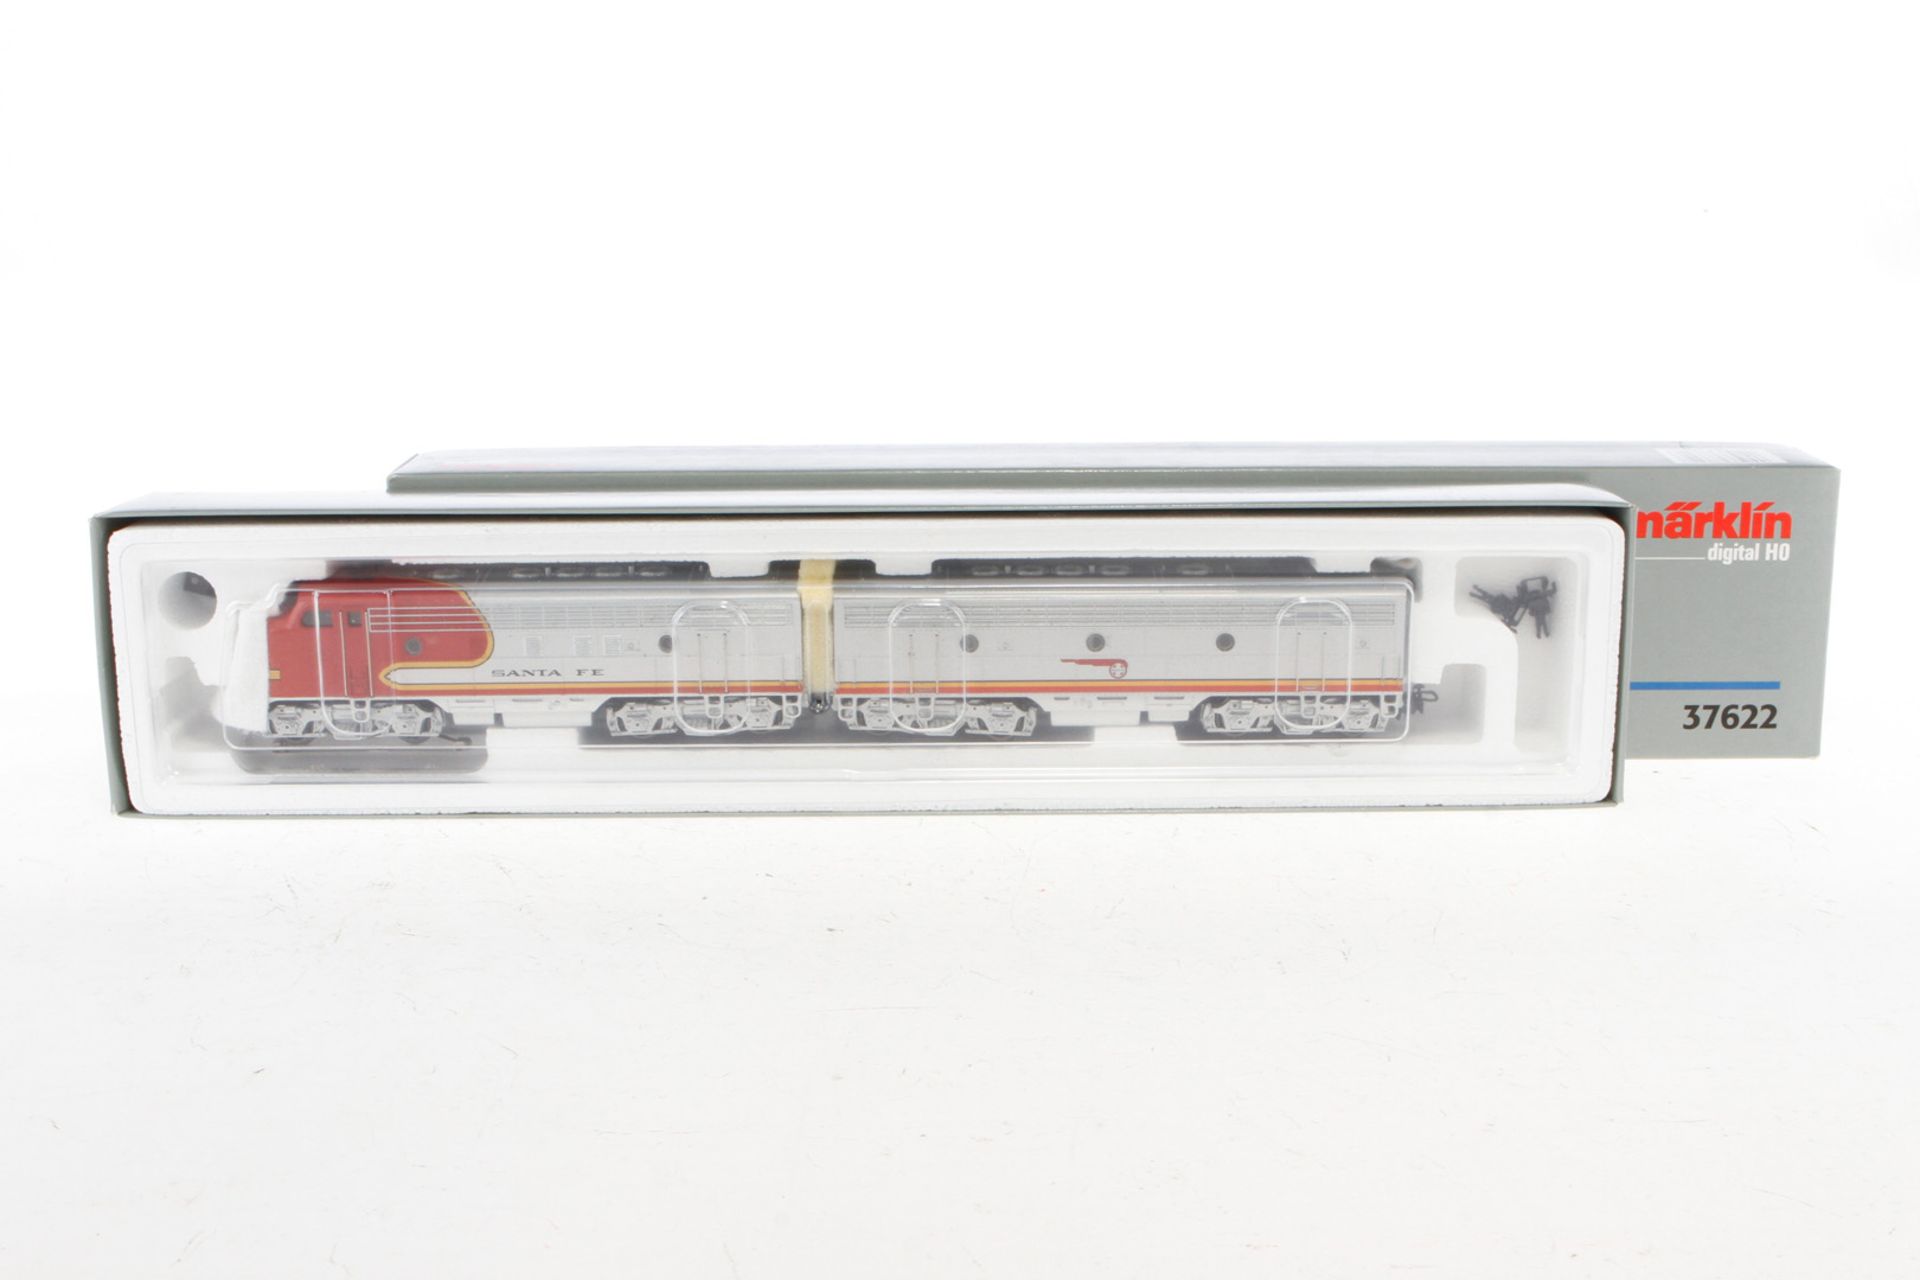 Märklin Digital Triebwagen ”Santa Fe” 37622, Spur H0, 2-teilig, silber/rot, Alterungsspuren, im